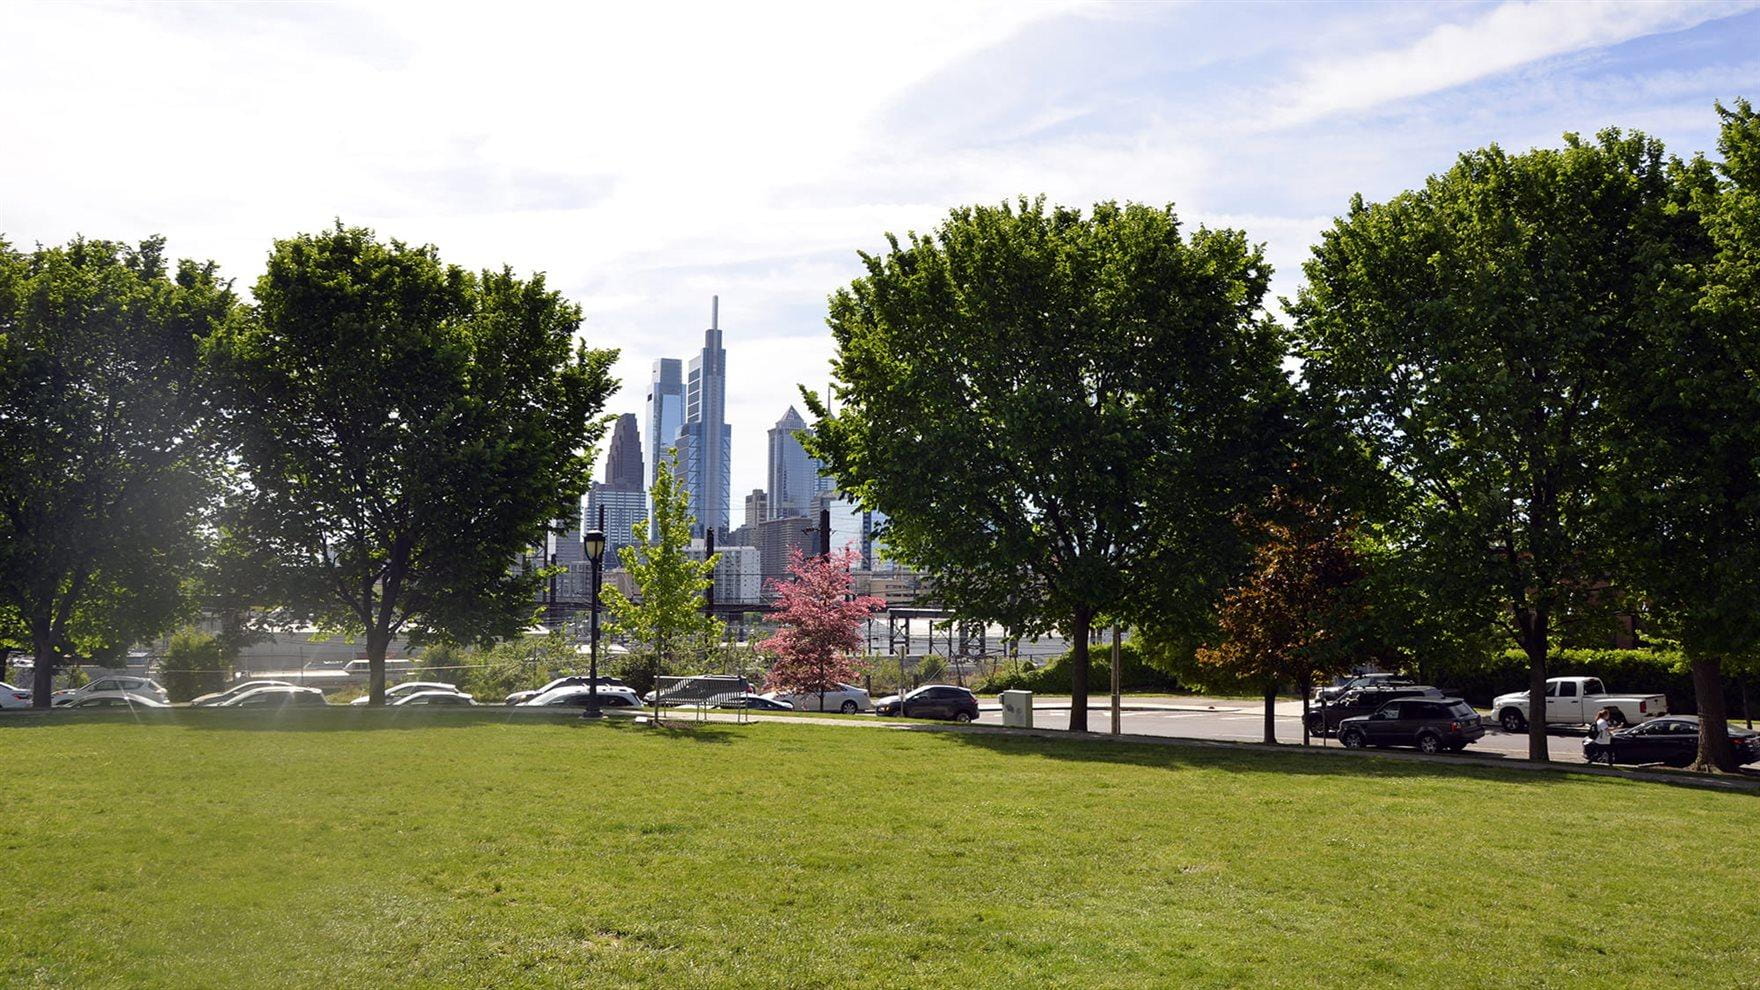 The view of the Philadelphia skyline from Drexel Park.